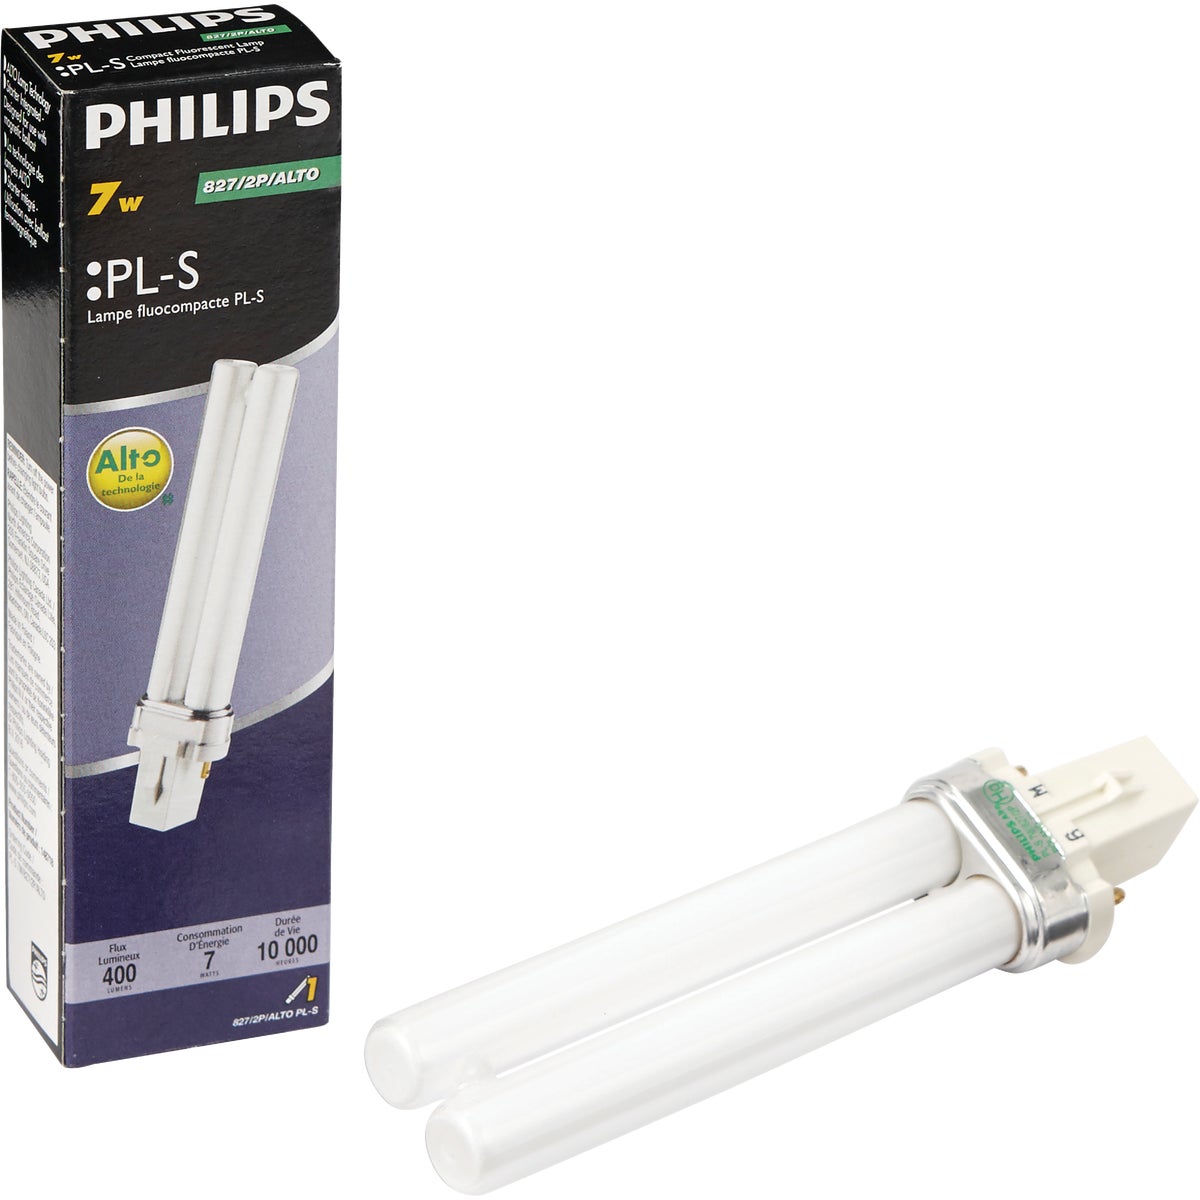 Philips 25W Equivalent Soft White G23 Base PL-S CFL Light Bulb